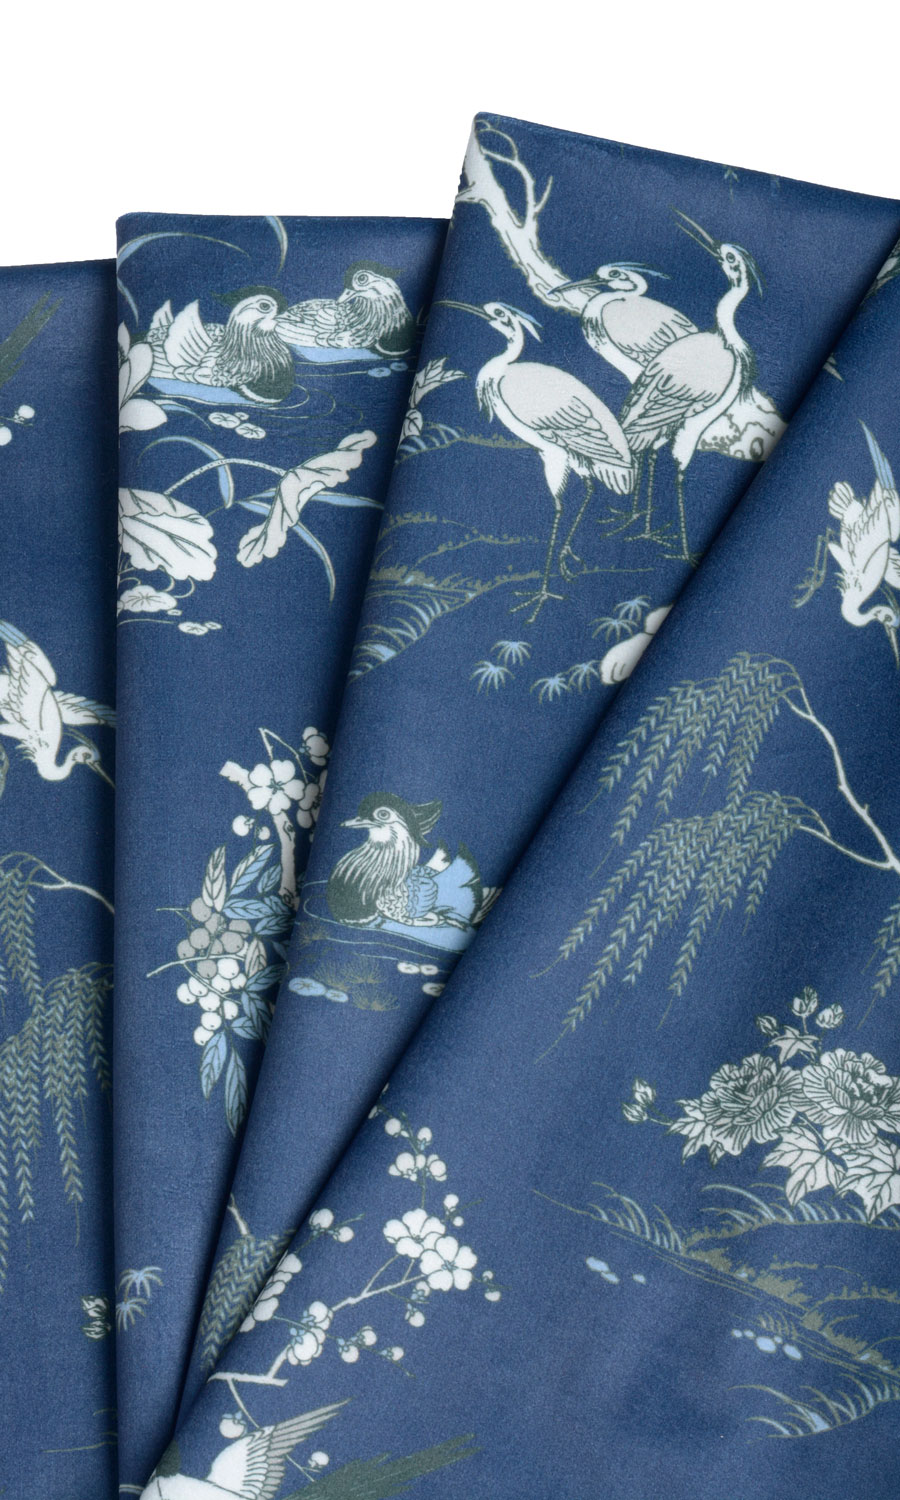 Lyon Toile China Blue Decorator Fabric – Savvy Swatch